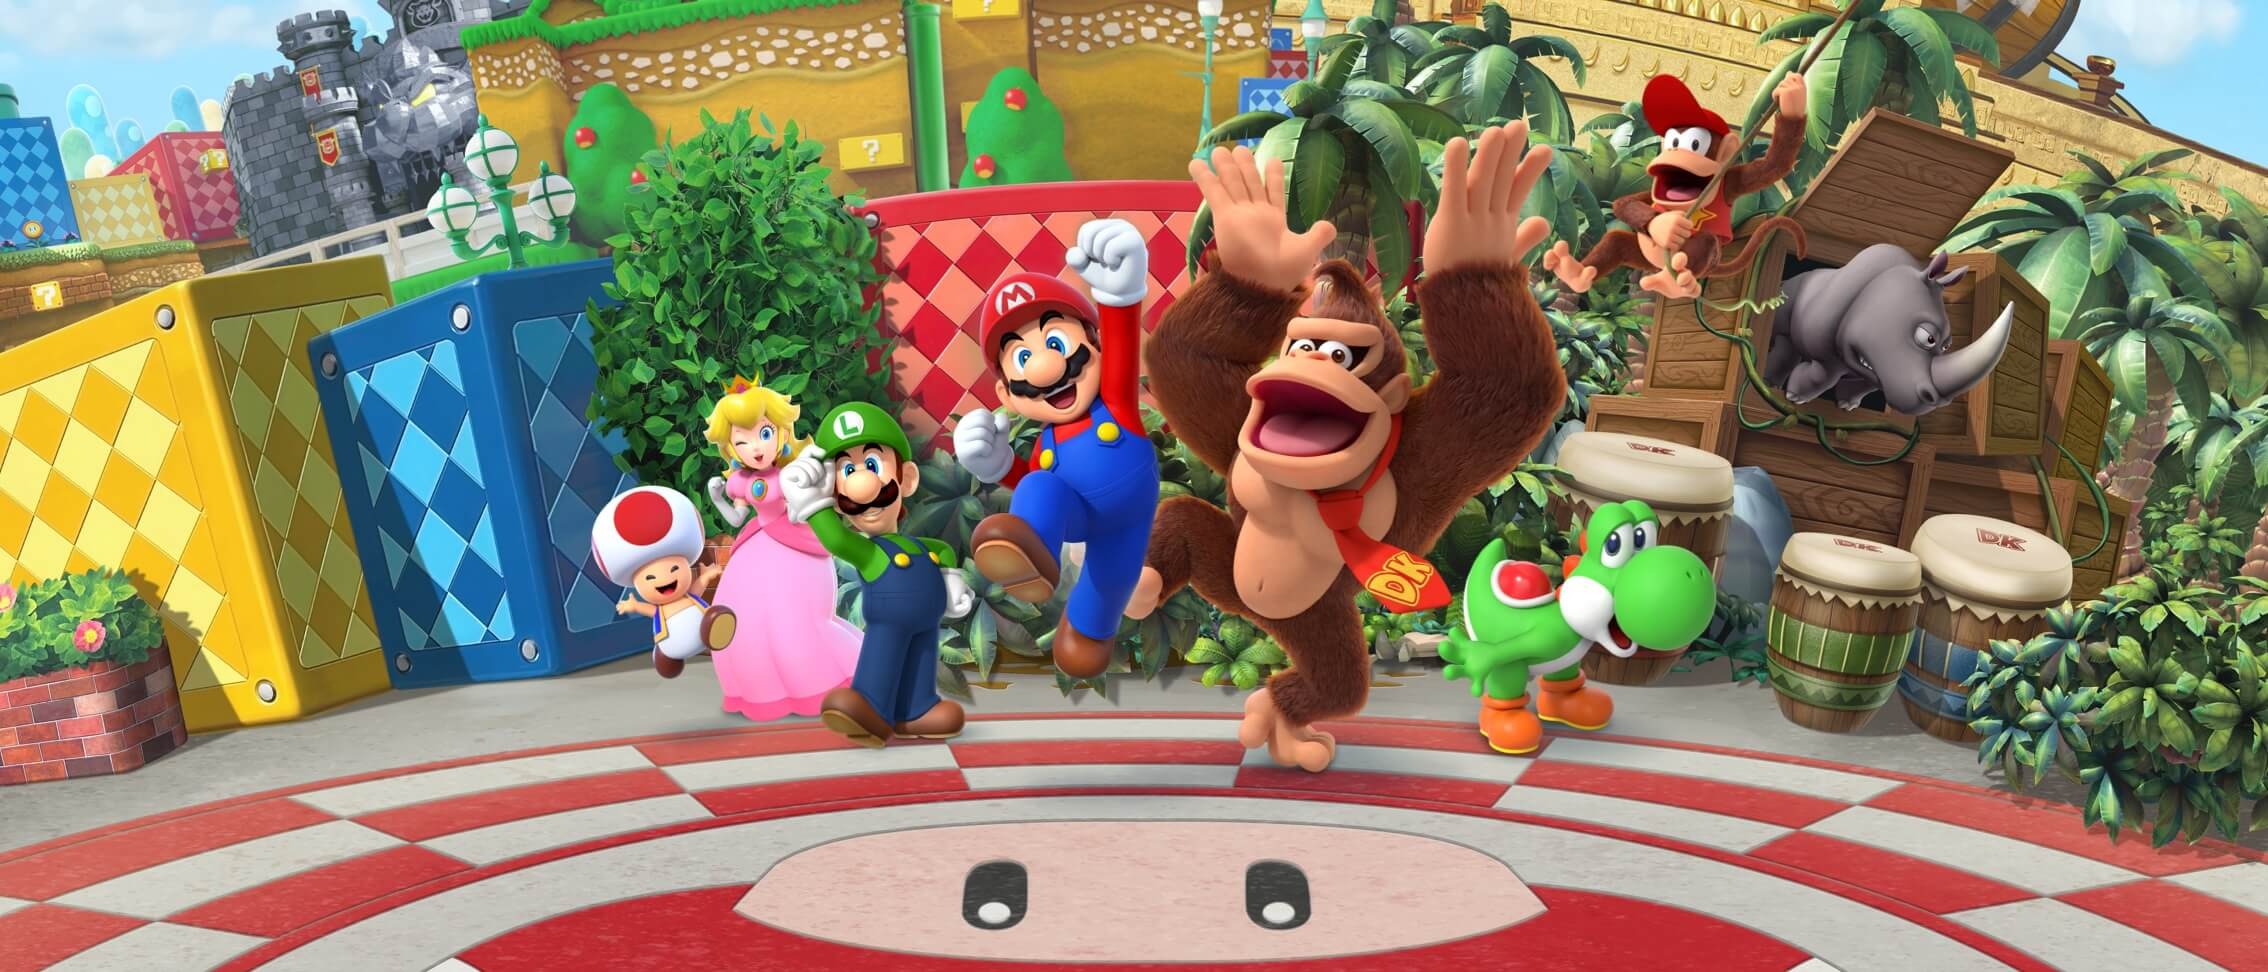 Universal Epic Universe: Jump on Mario and Donkey Kong rides